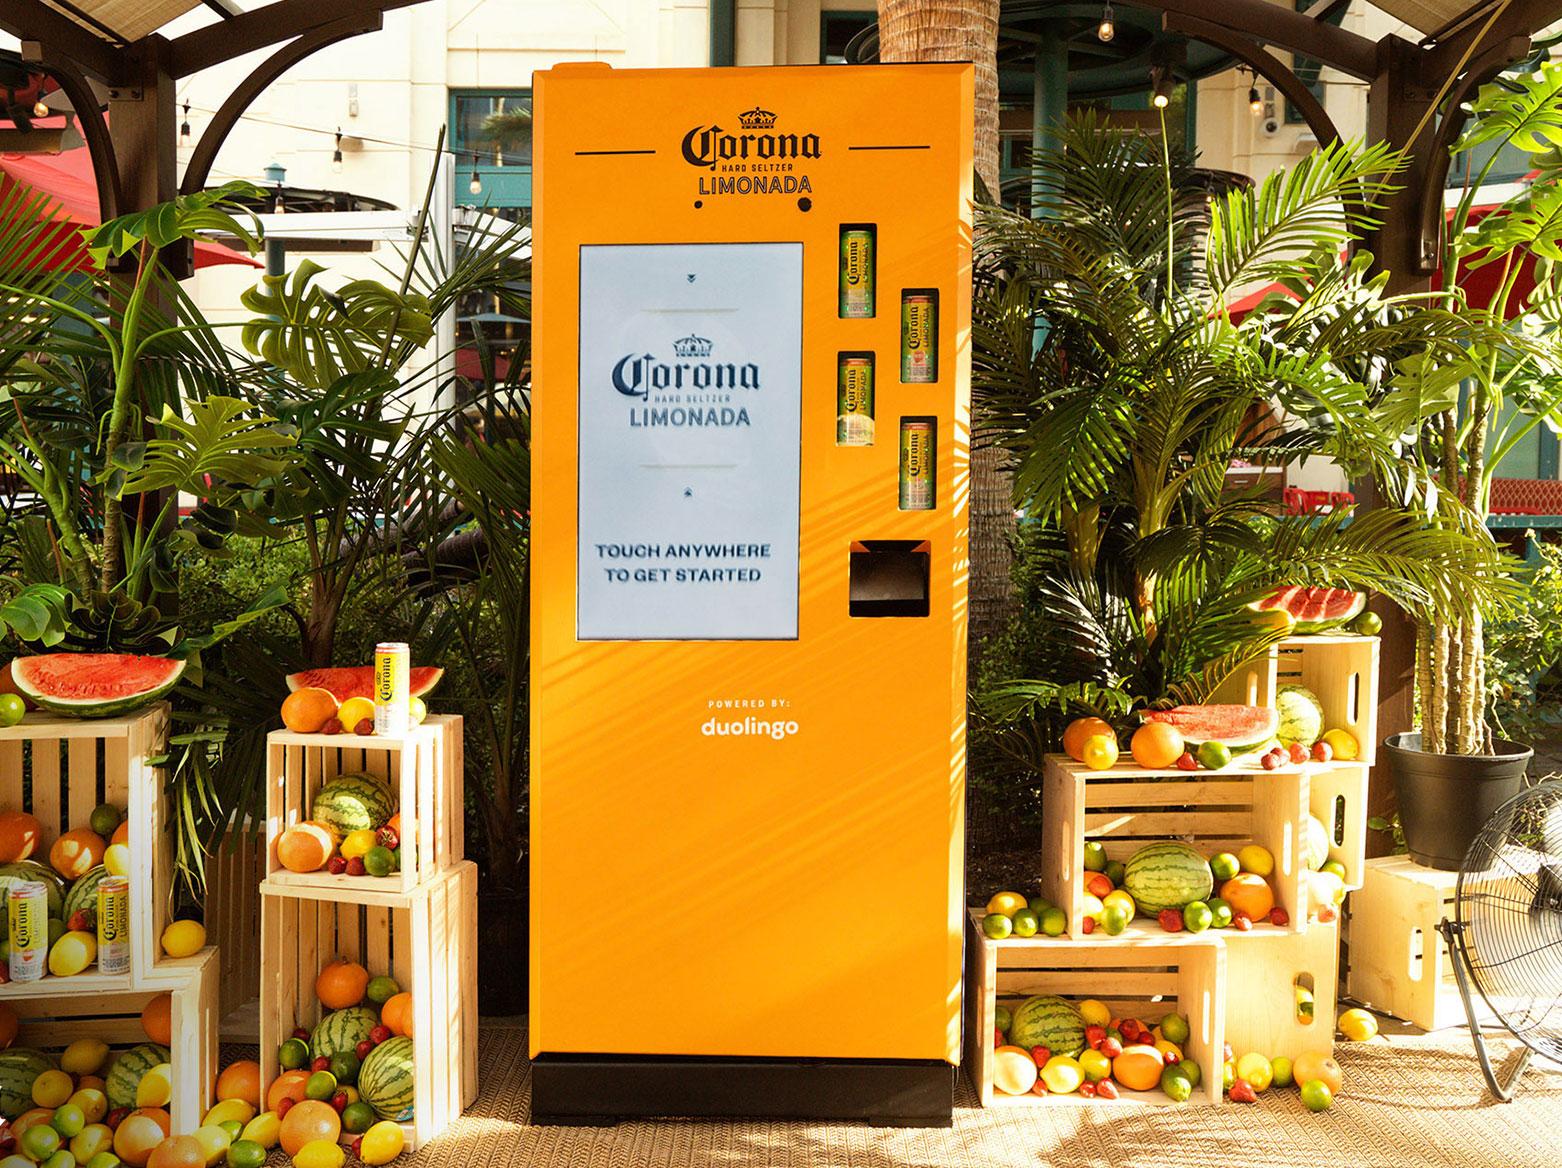 man at corona vending machine